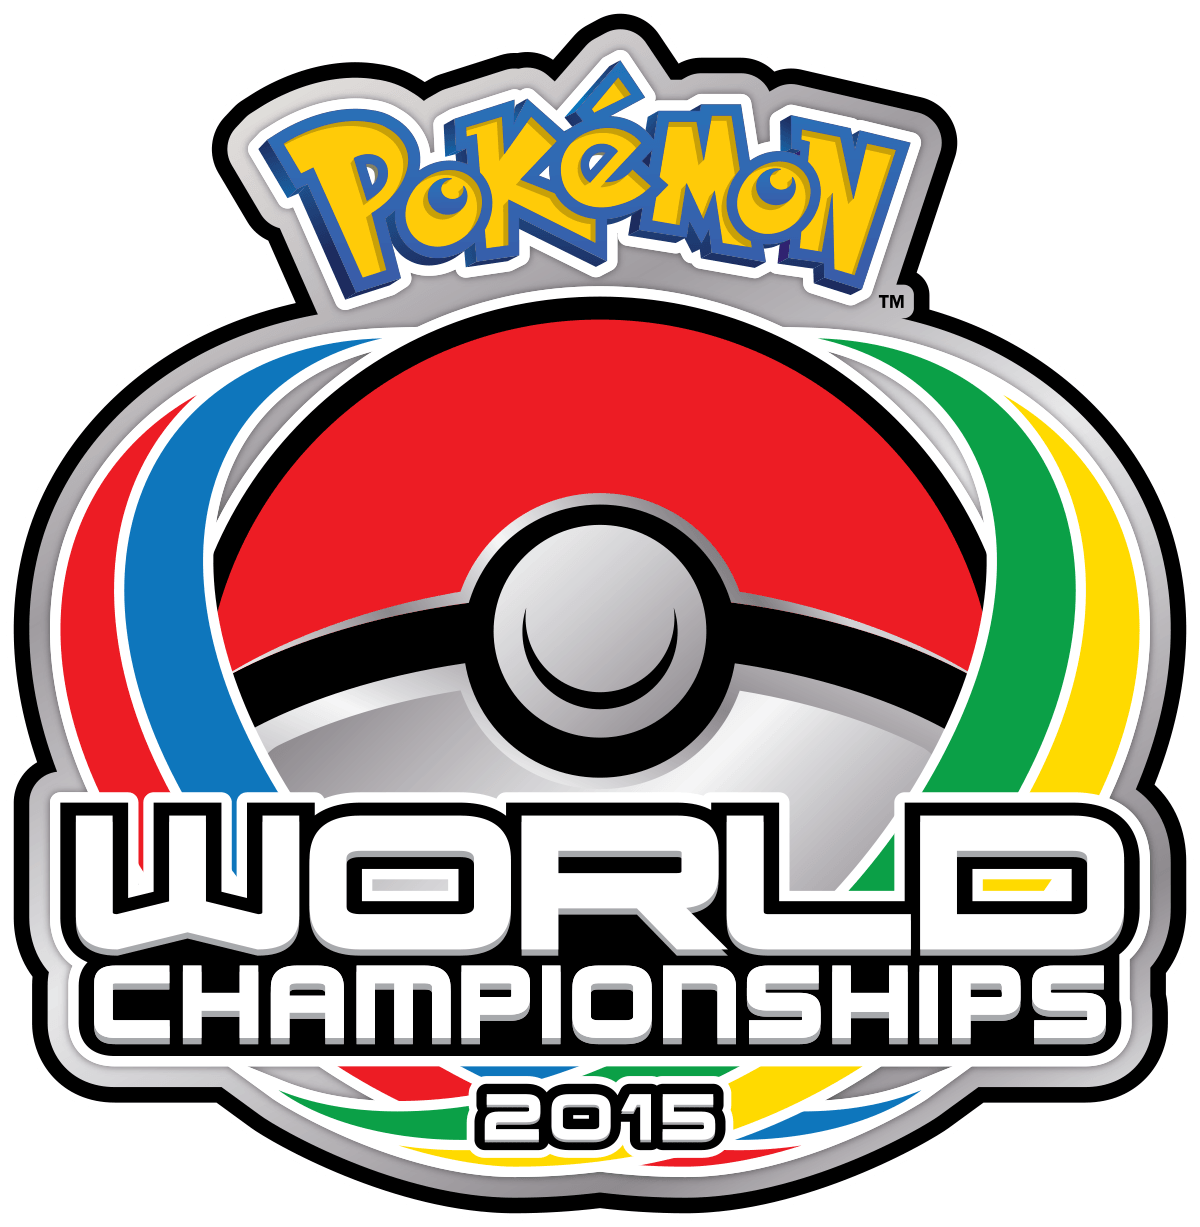 Pokemon World Championships 2015 Begin Tomorrow Capsule Computers